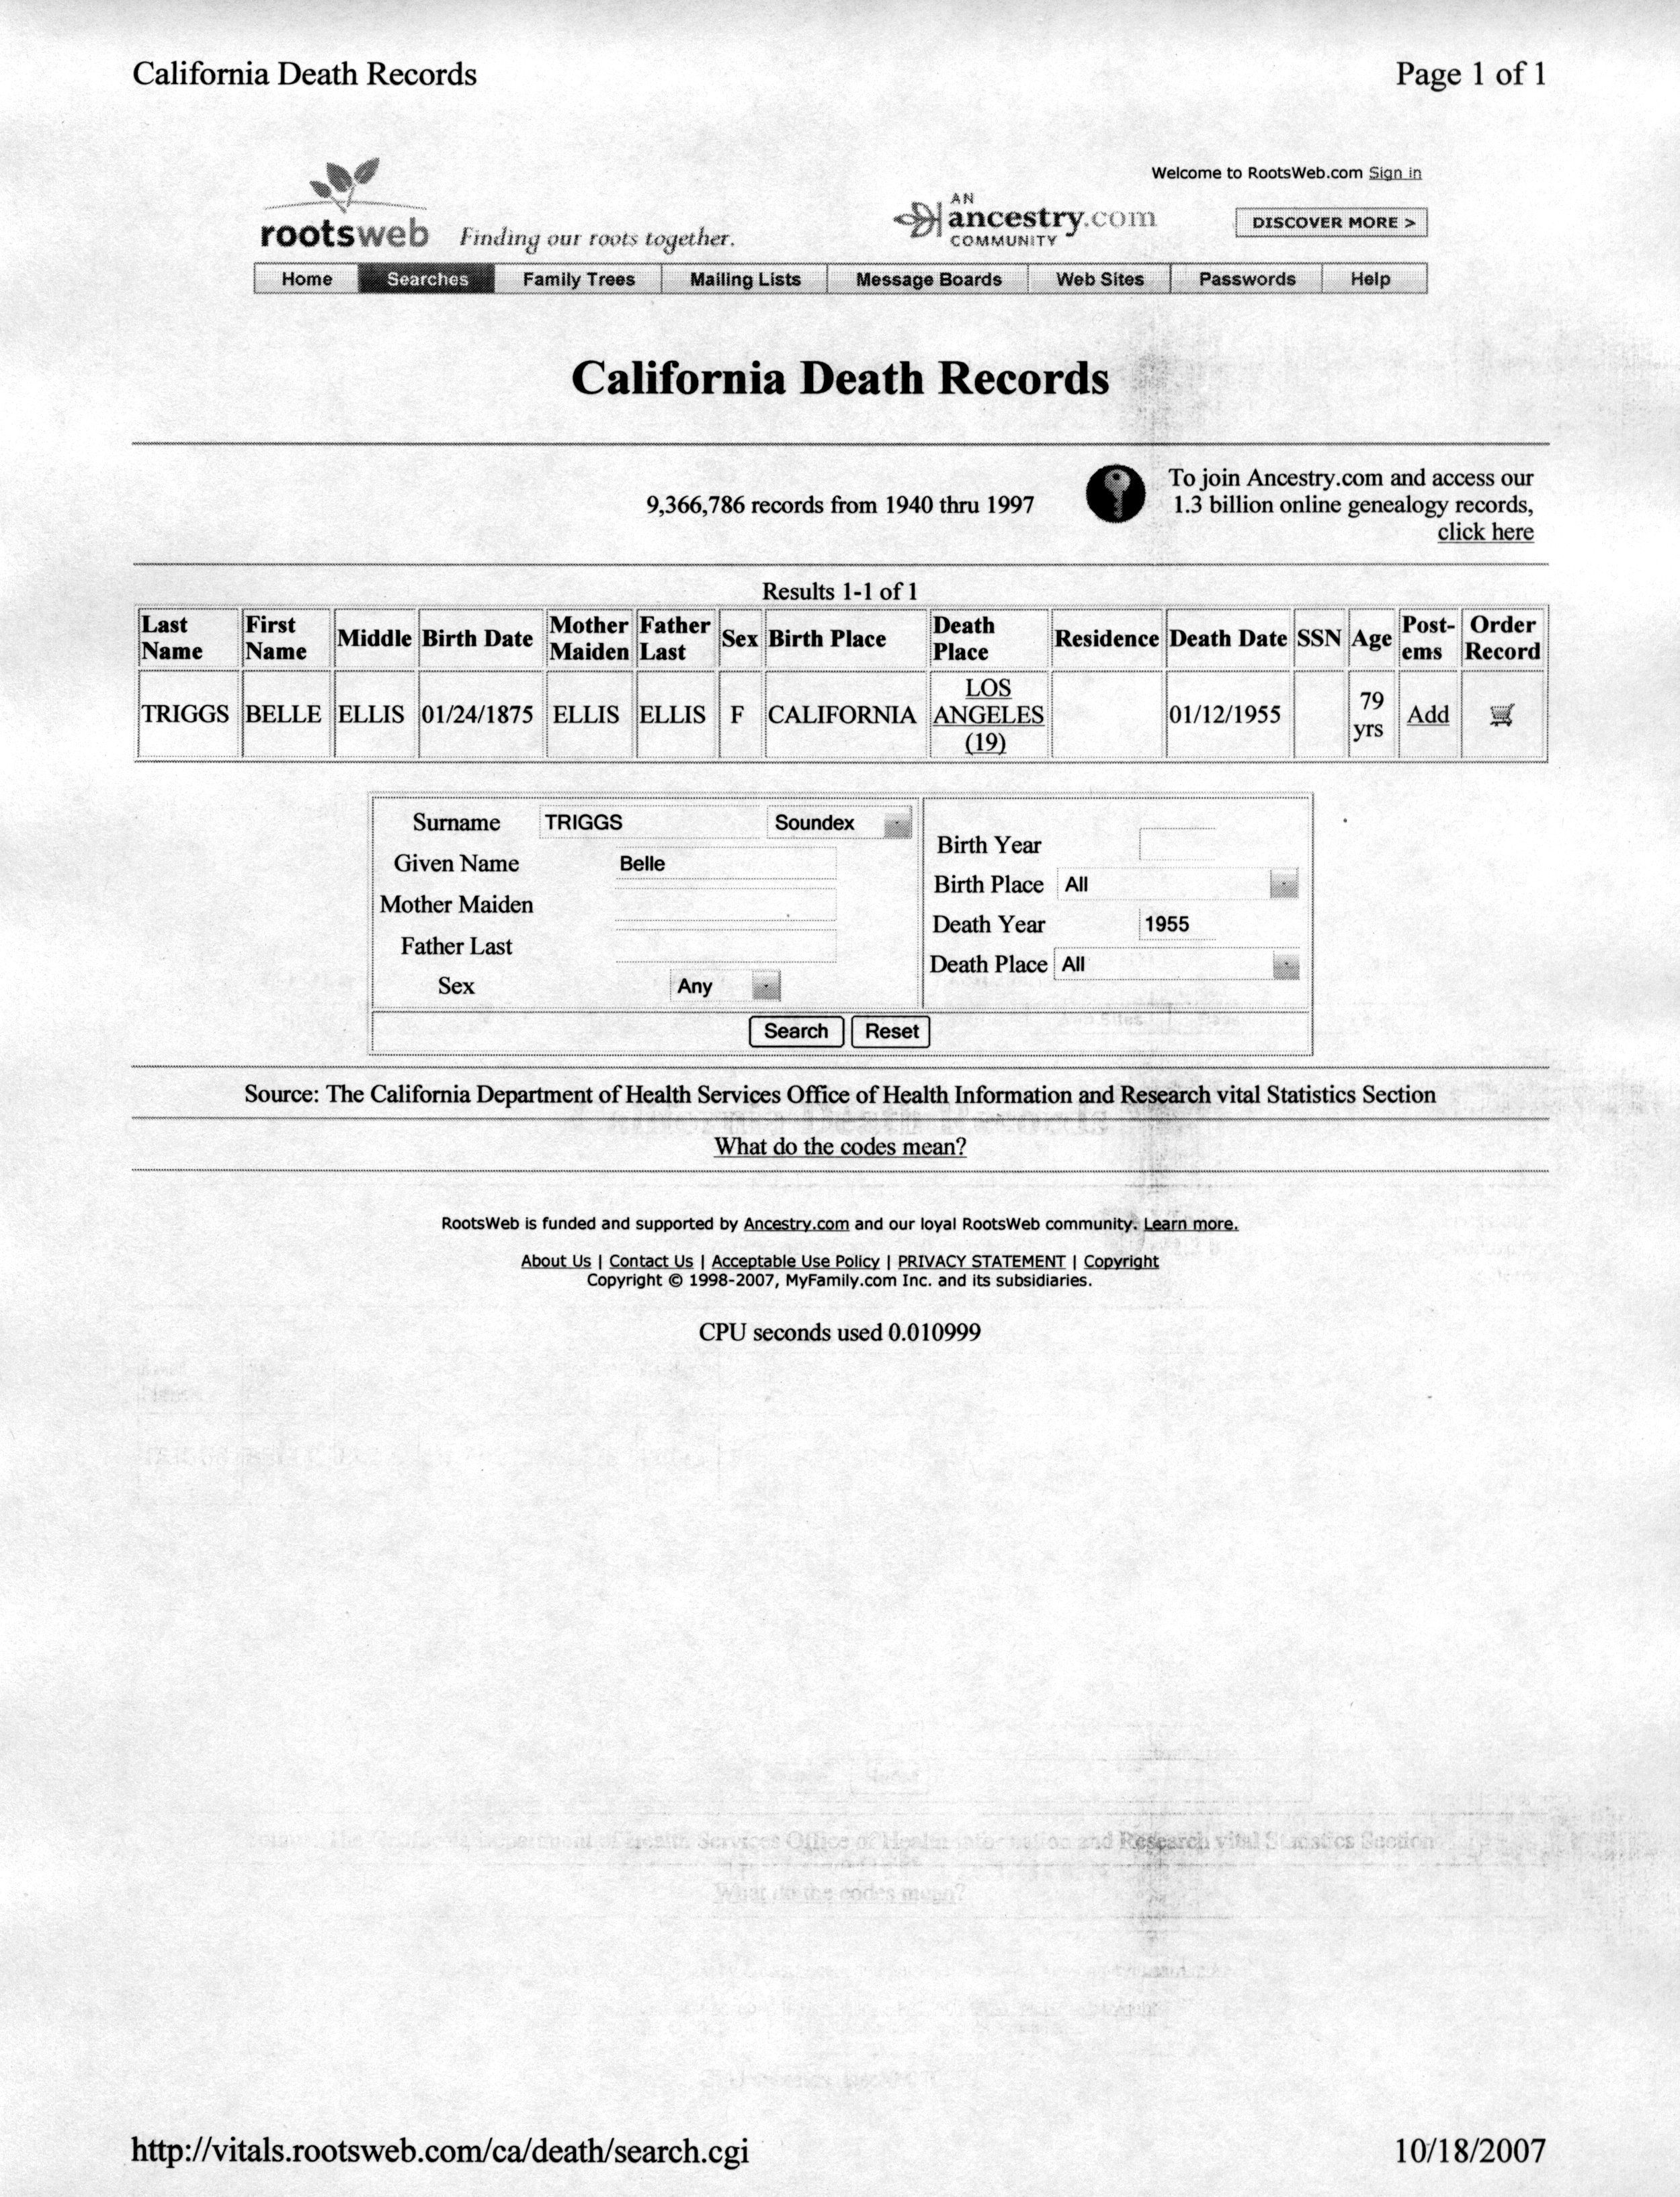 Belle Ellis - California Death Record.jpg